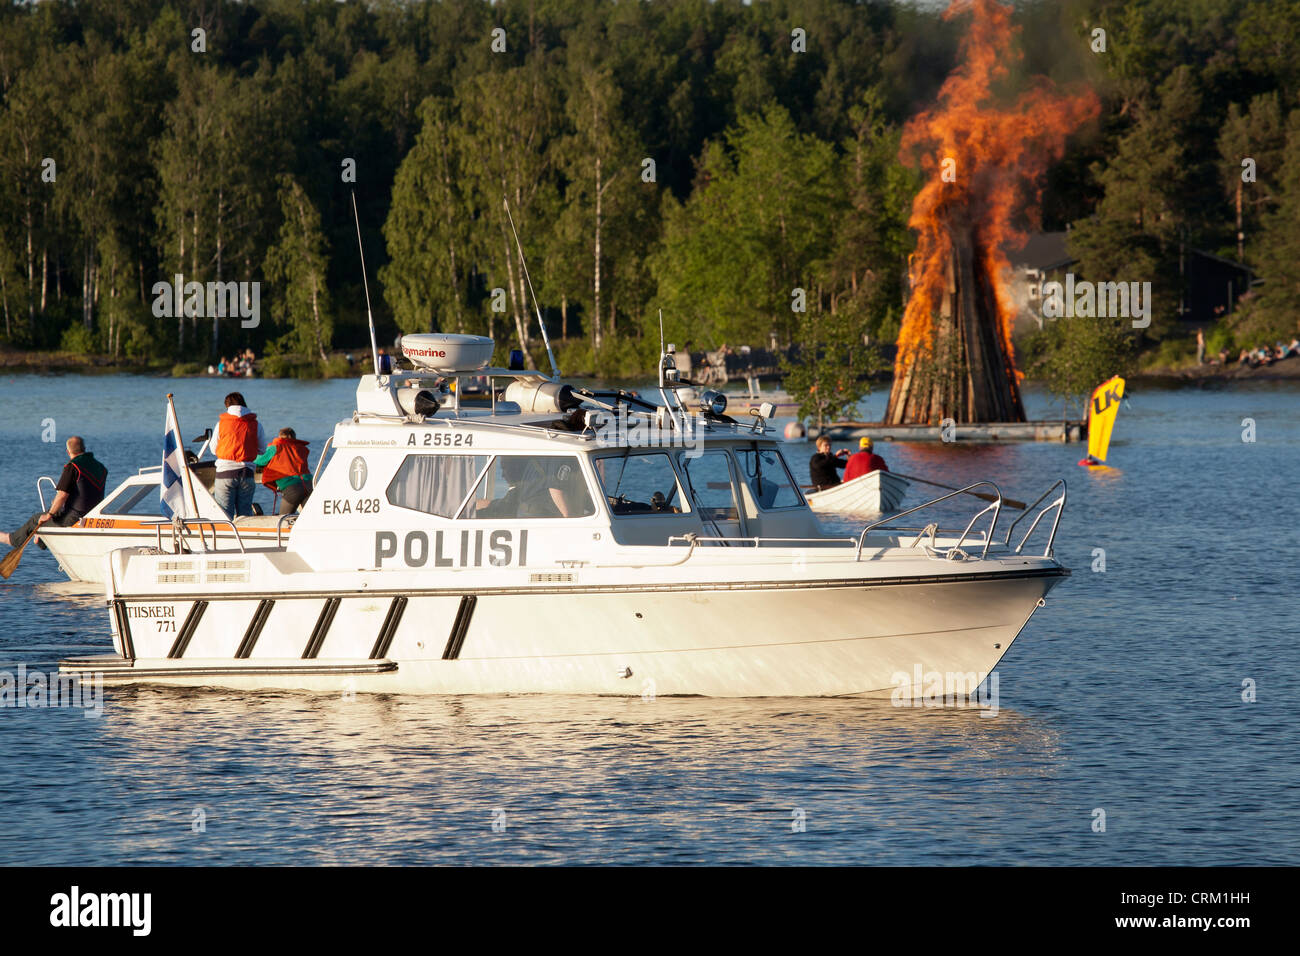 Police boat with Midsummer bonfire, Lappeenranta Finland Stock Photo